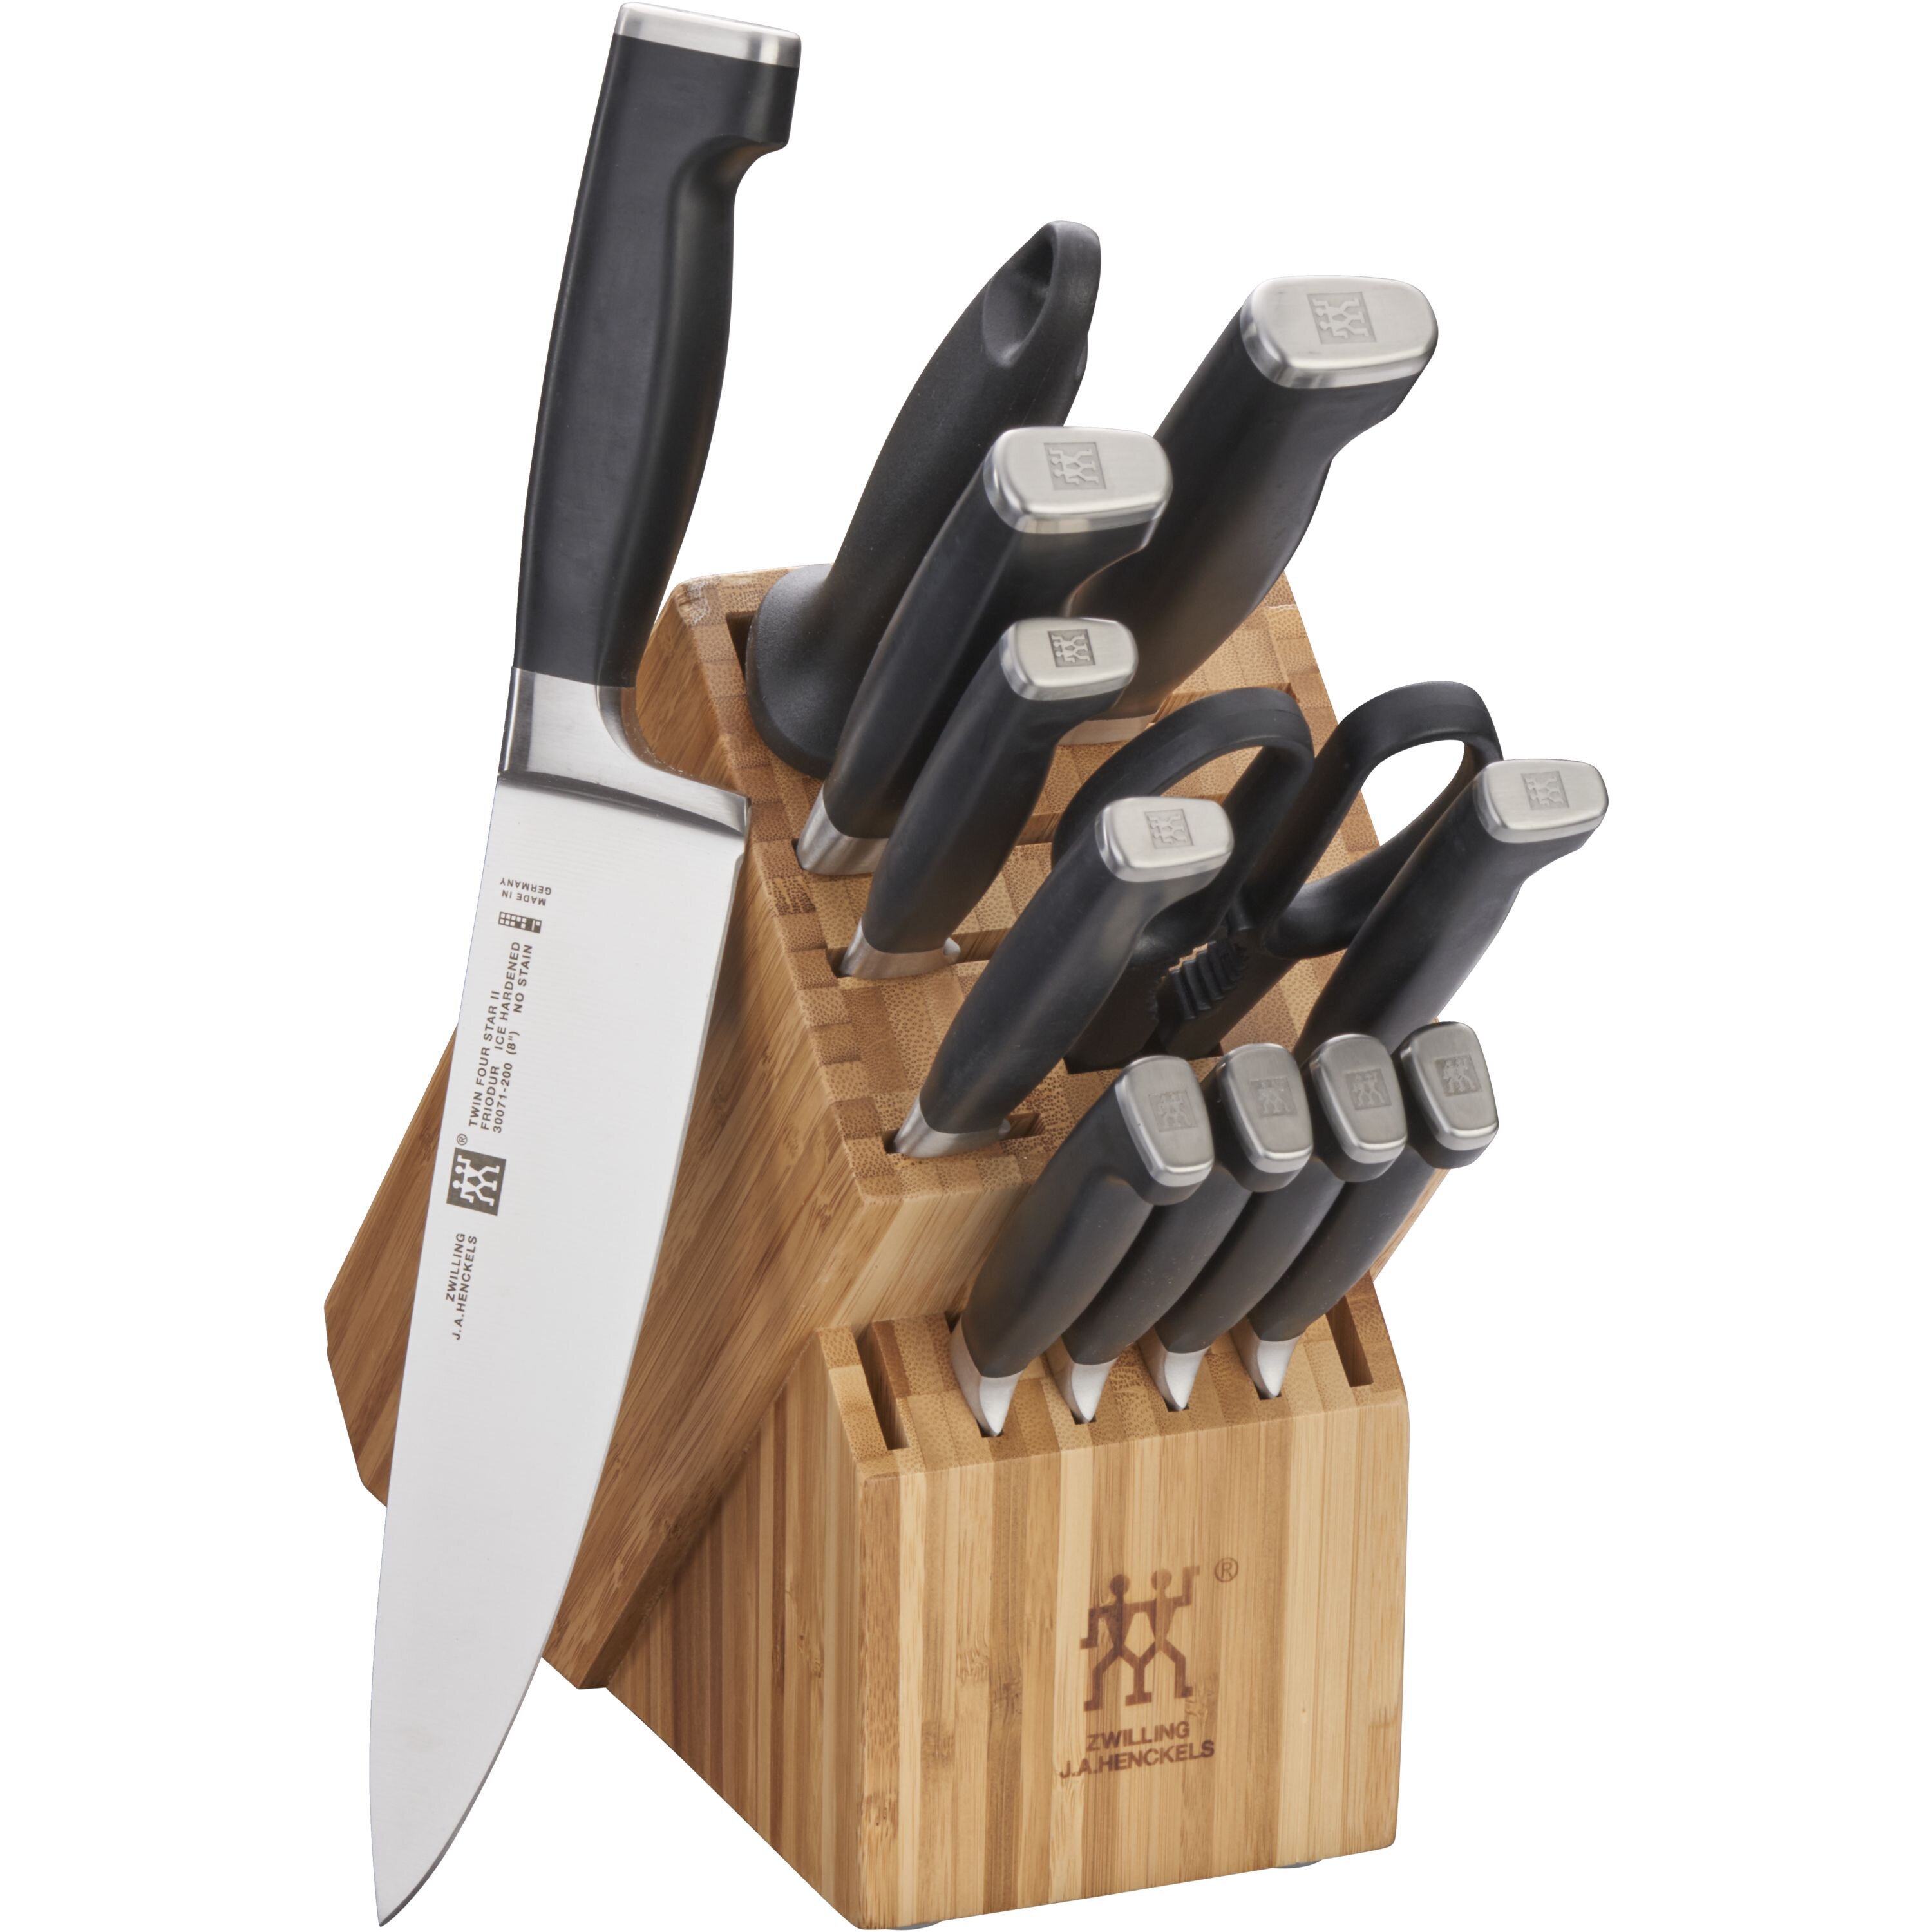 Wayfair sale: Get the Henckels Modernist 13-Piece Knife Block Set